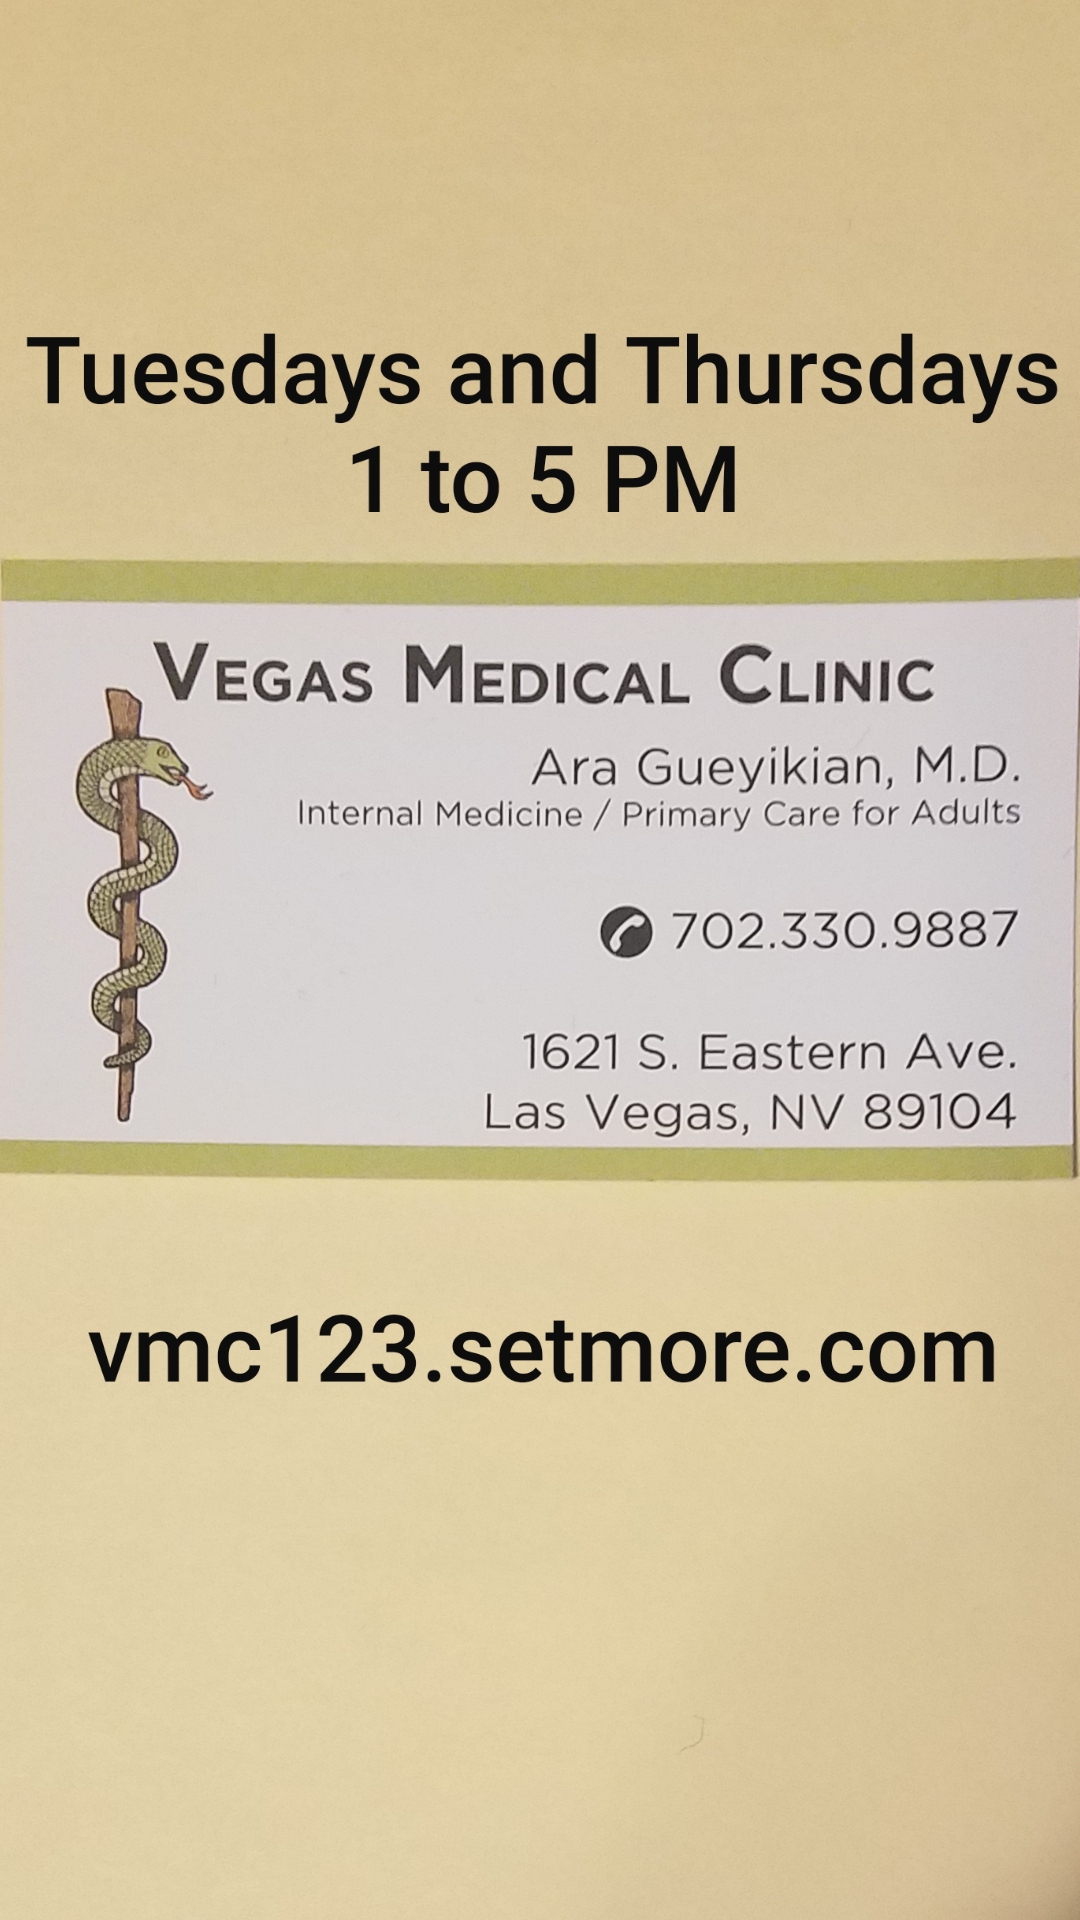 Vegas Medical Clinic